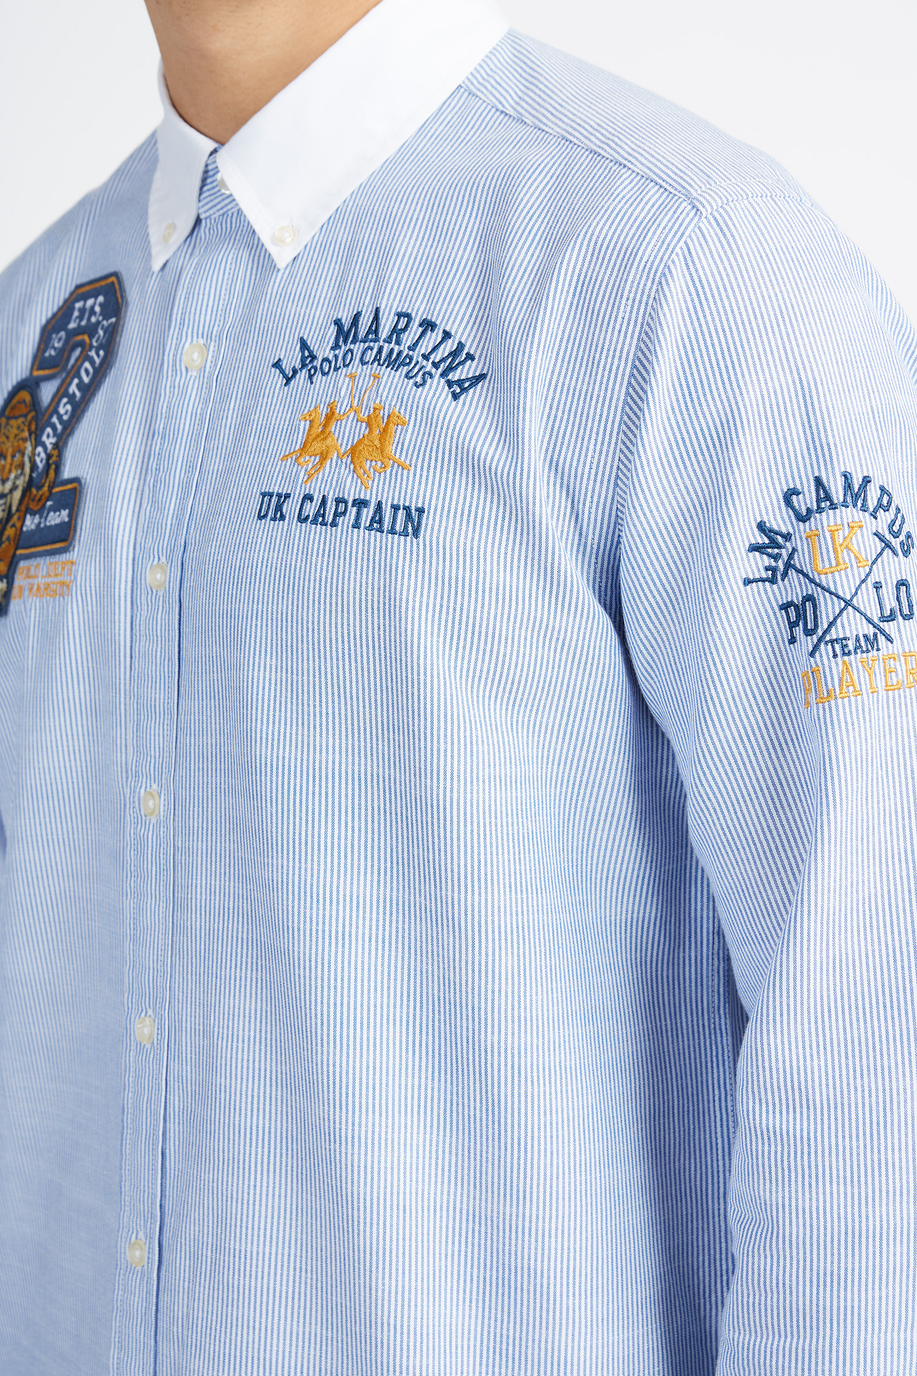 Camicia uomo manica lunga capsule Polo Academy fantasia a righe logo grande - Valari - Camicie | La Martina - Official Online Shop